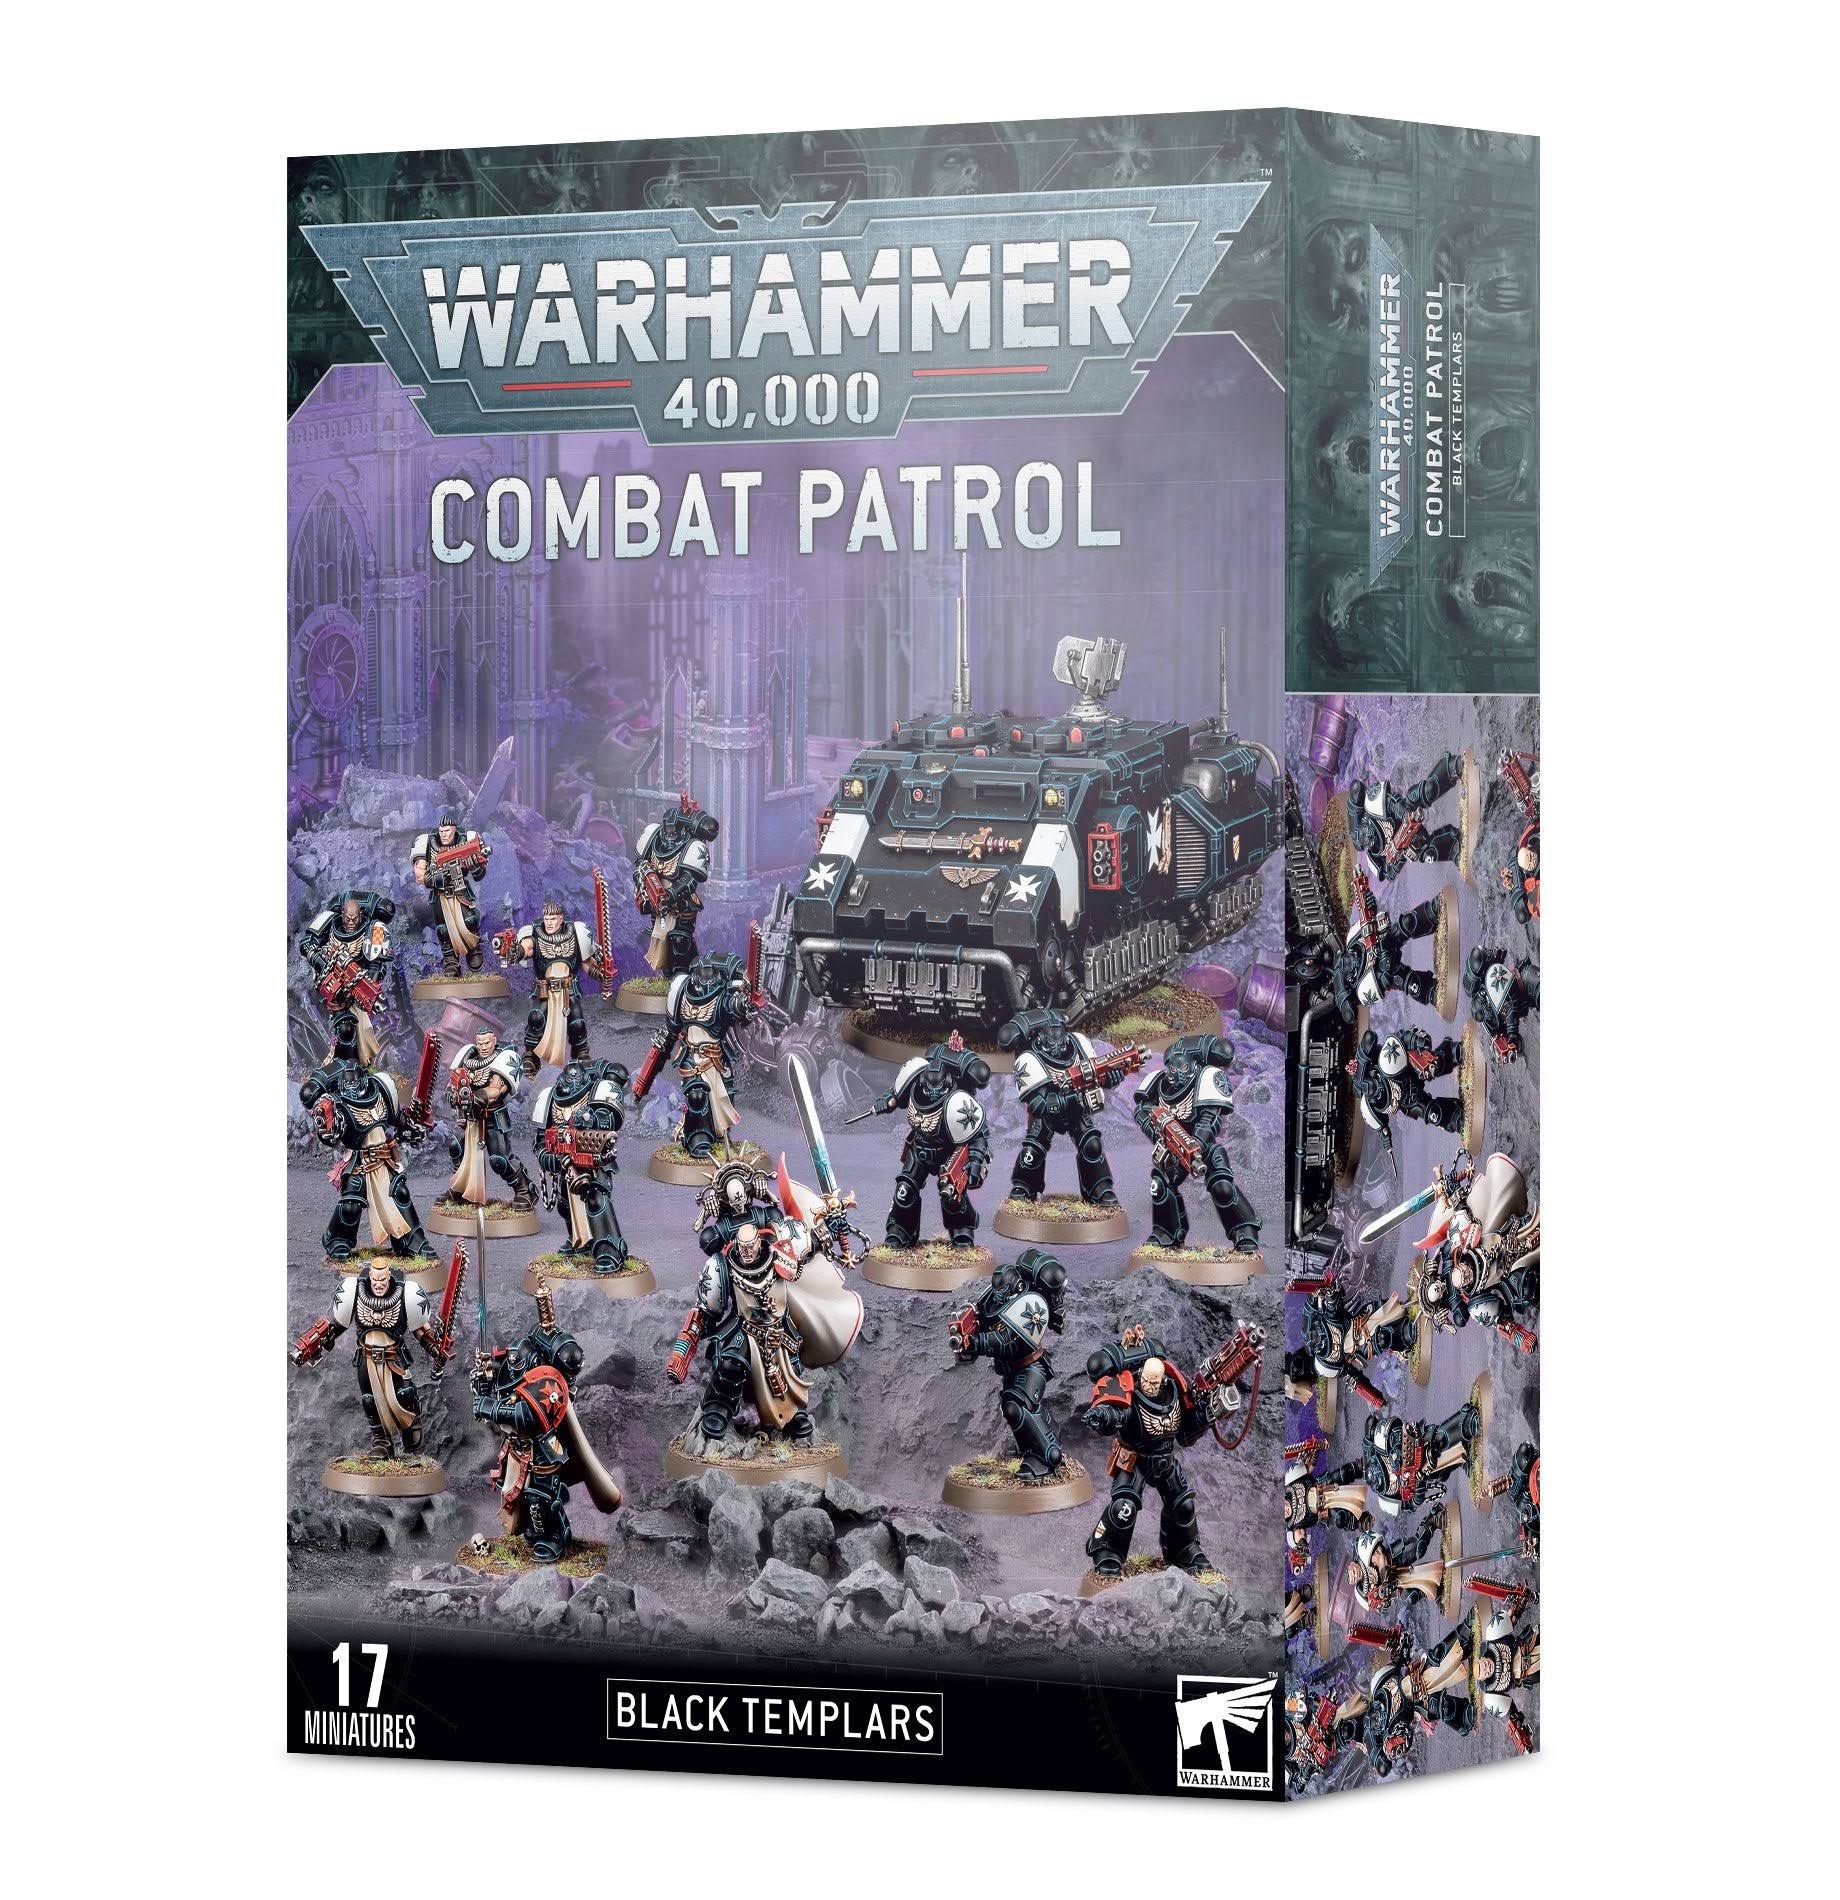 Warhammer Combat Patrol Black Templars 55-50